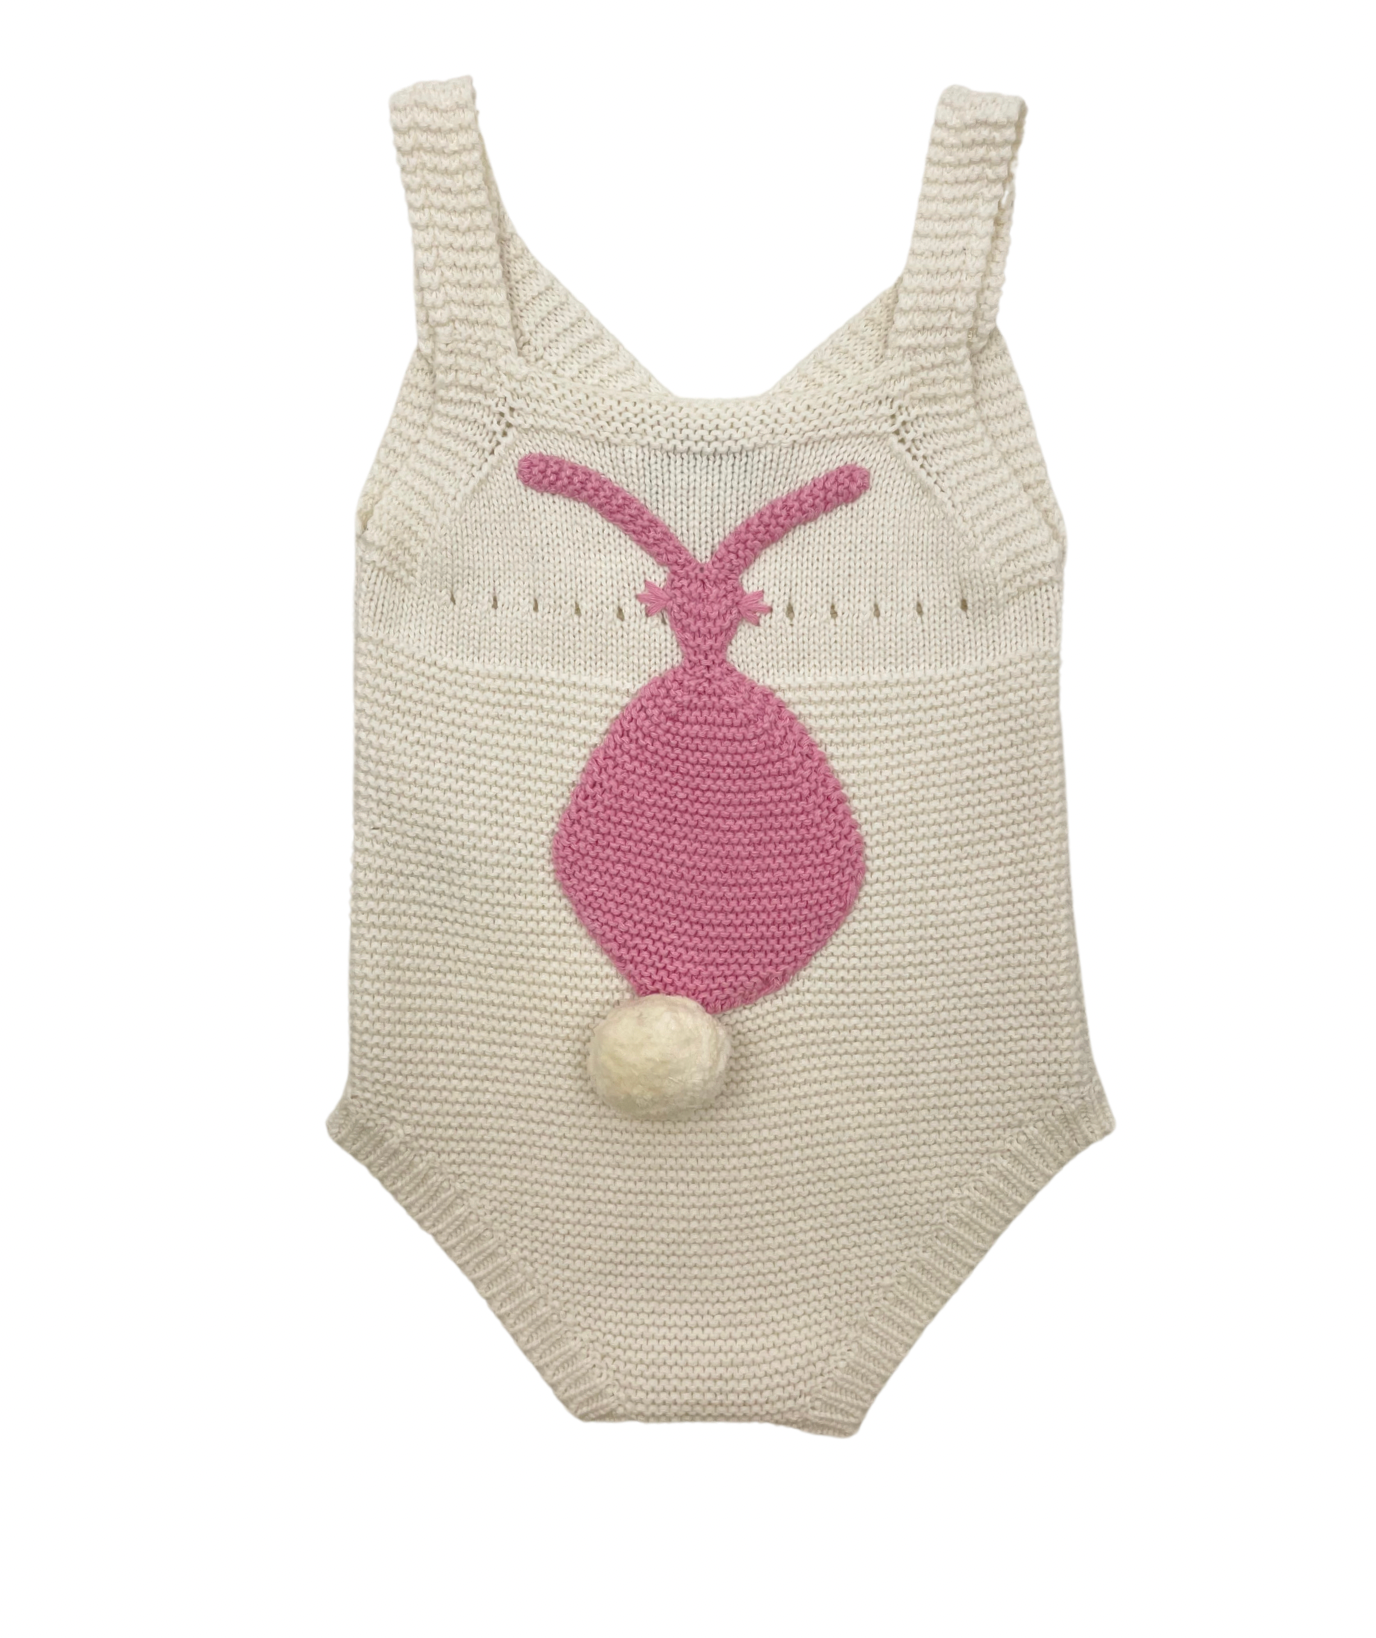 STELLA MCCARTNEY - Pink bunny knit bodysuit - 1 year old